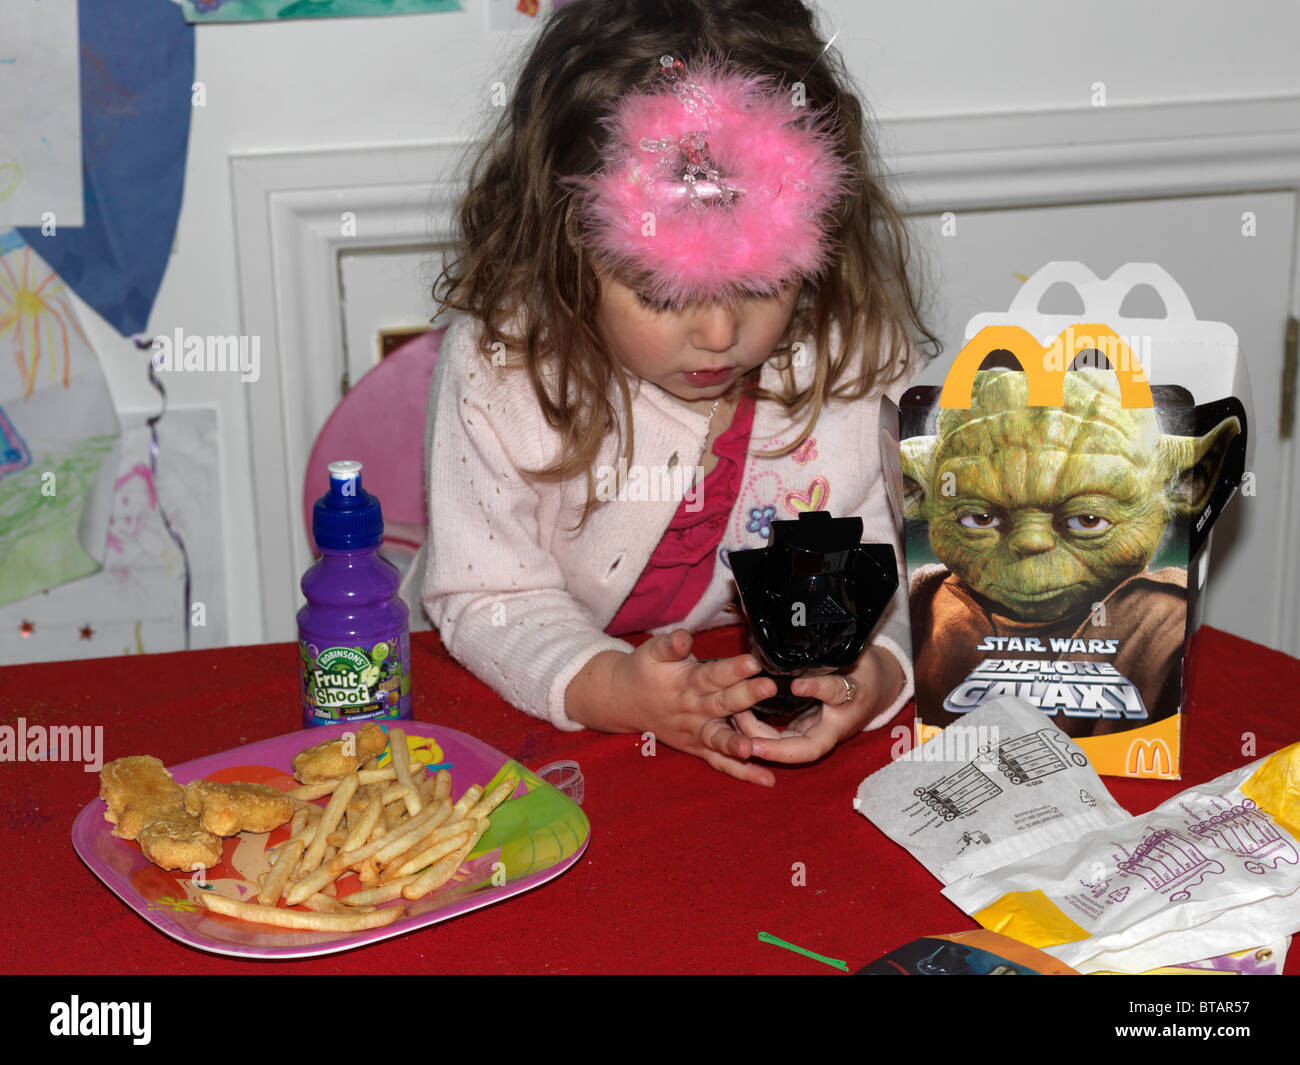 Ragazza giovane con un Mcdonald's Happy Meal giocando con una Star Wars toy Inghilterra Foto Stock